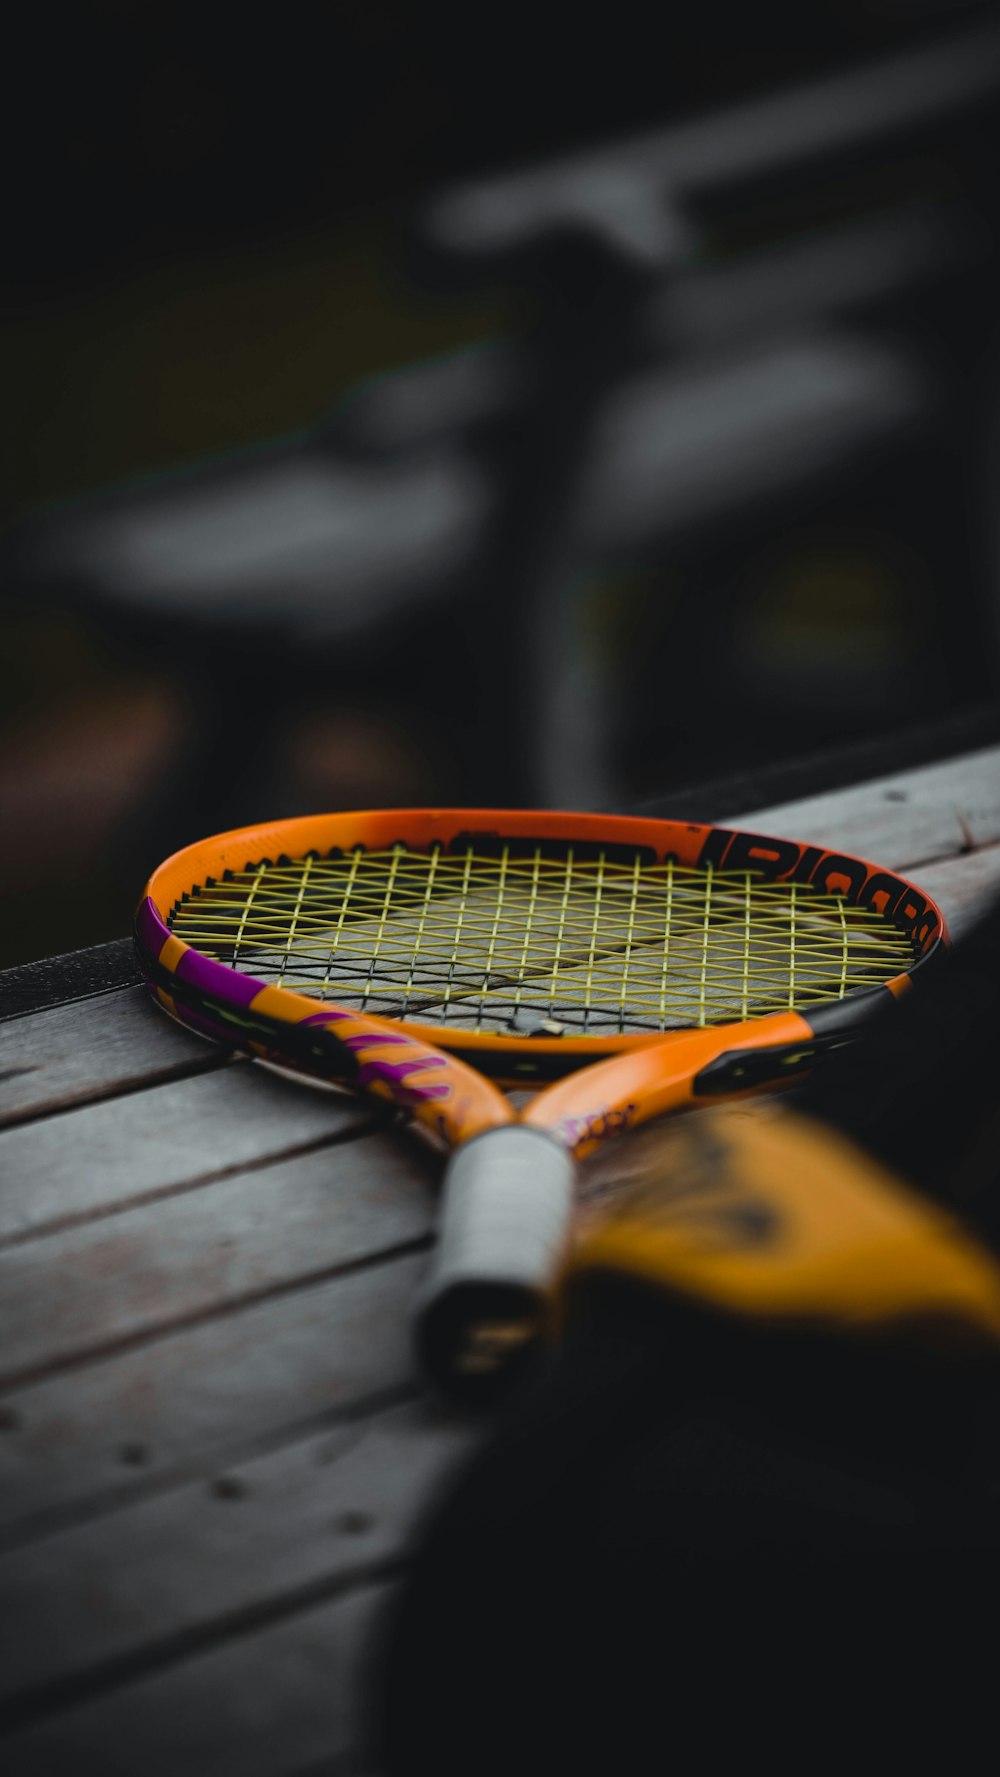 a pair of tennis rackets